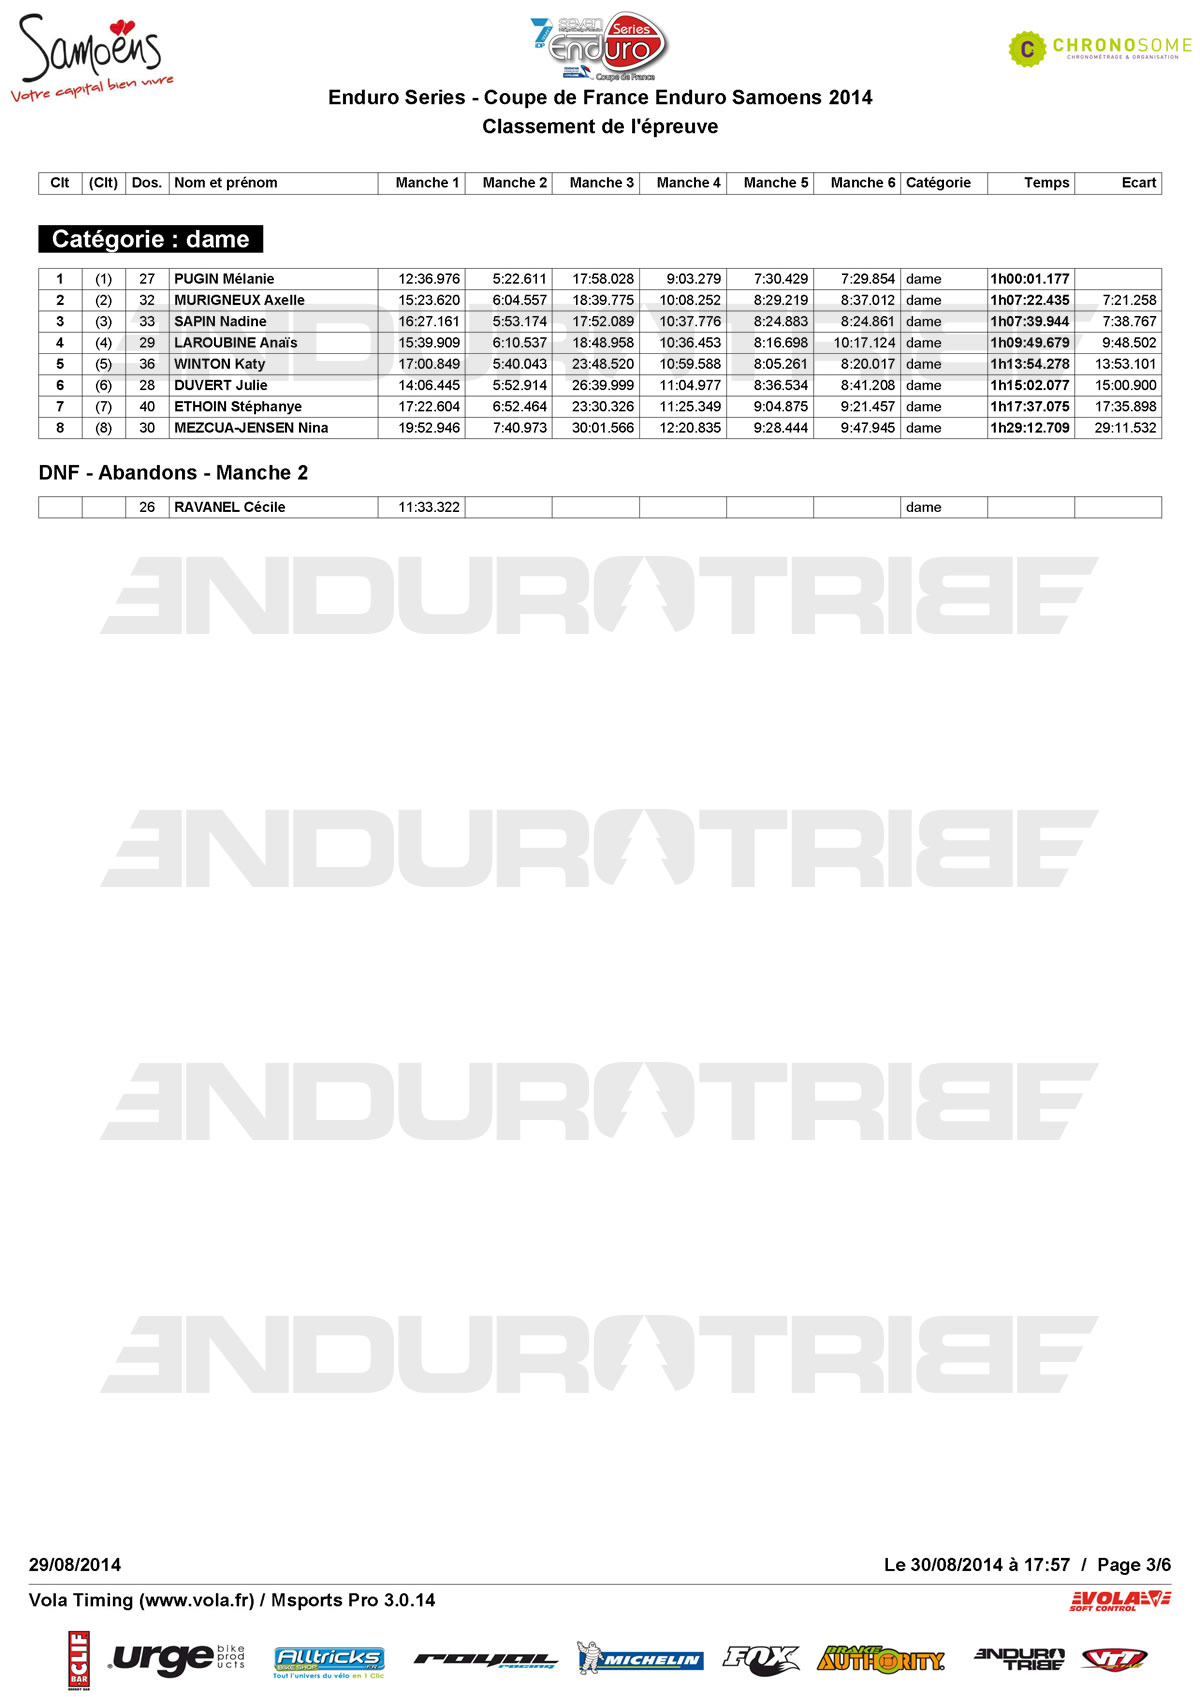 Enduro Series - Coupe de France Enduro Samoens - Samedi par categories_Page_3